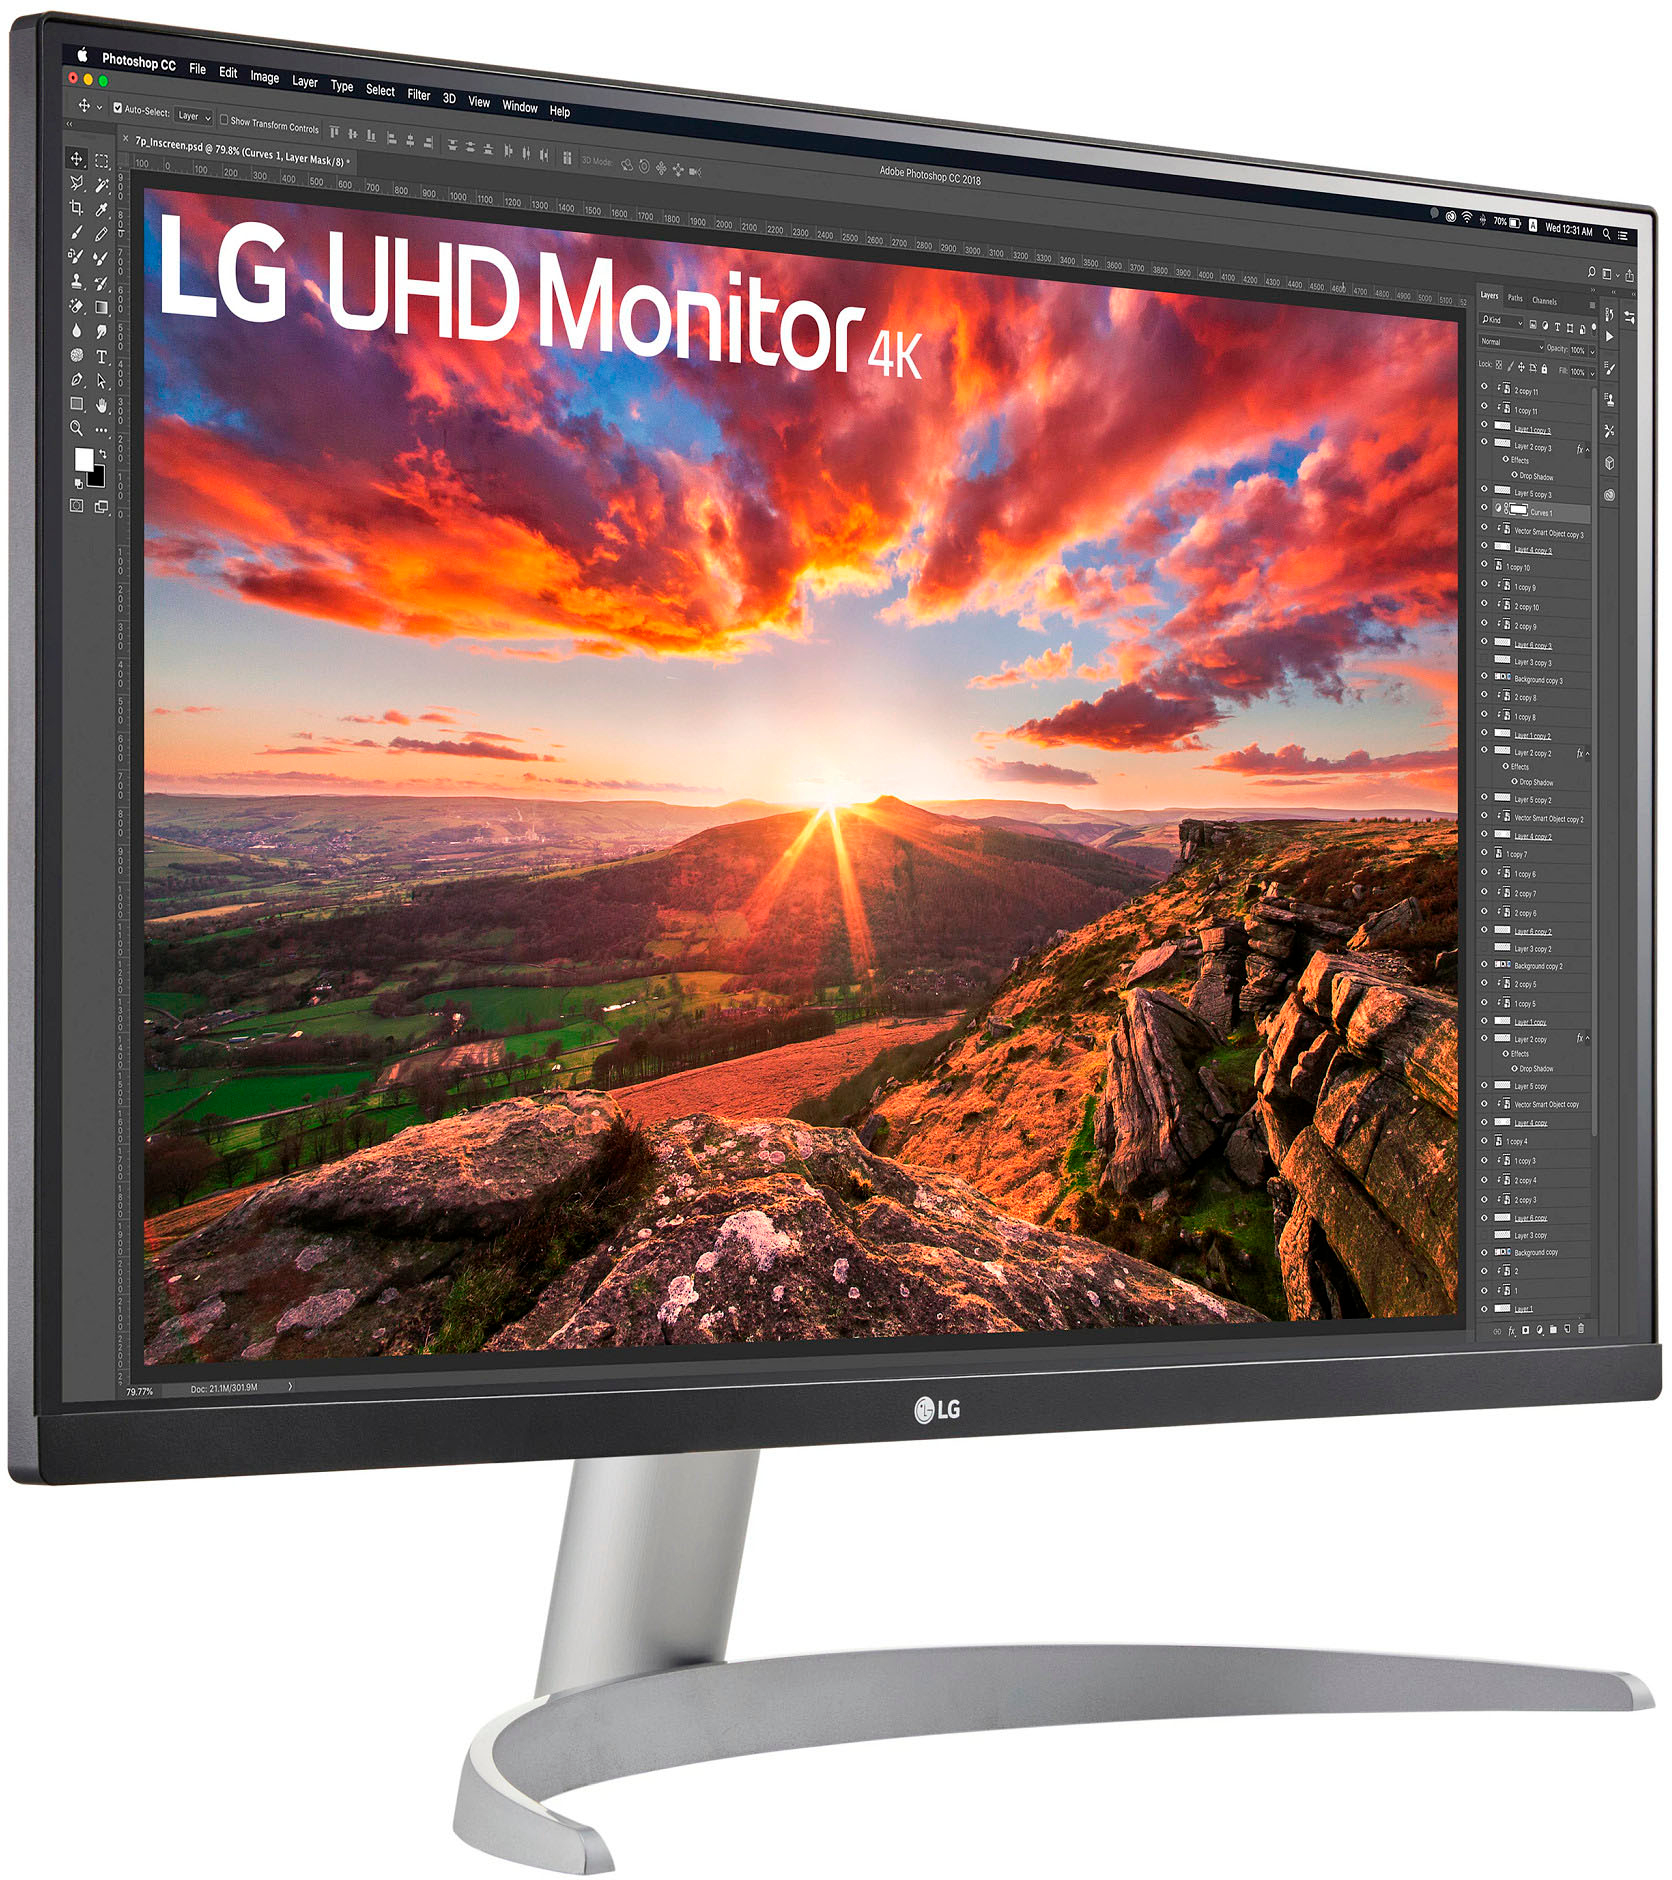 Angle View: LG - 27” IPS LED 4K UHD AMD FreeSync  Monitor with HDR (HDMI, DisplayPort, USB) - White